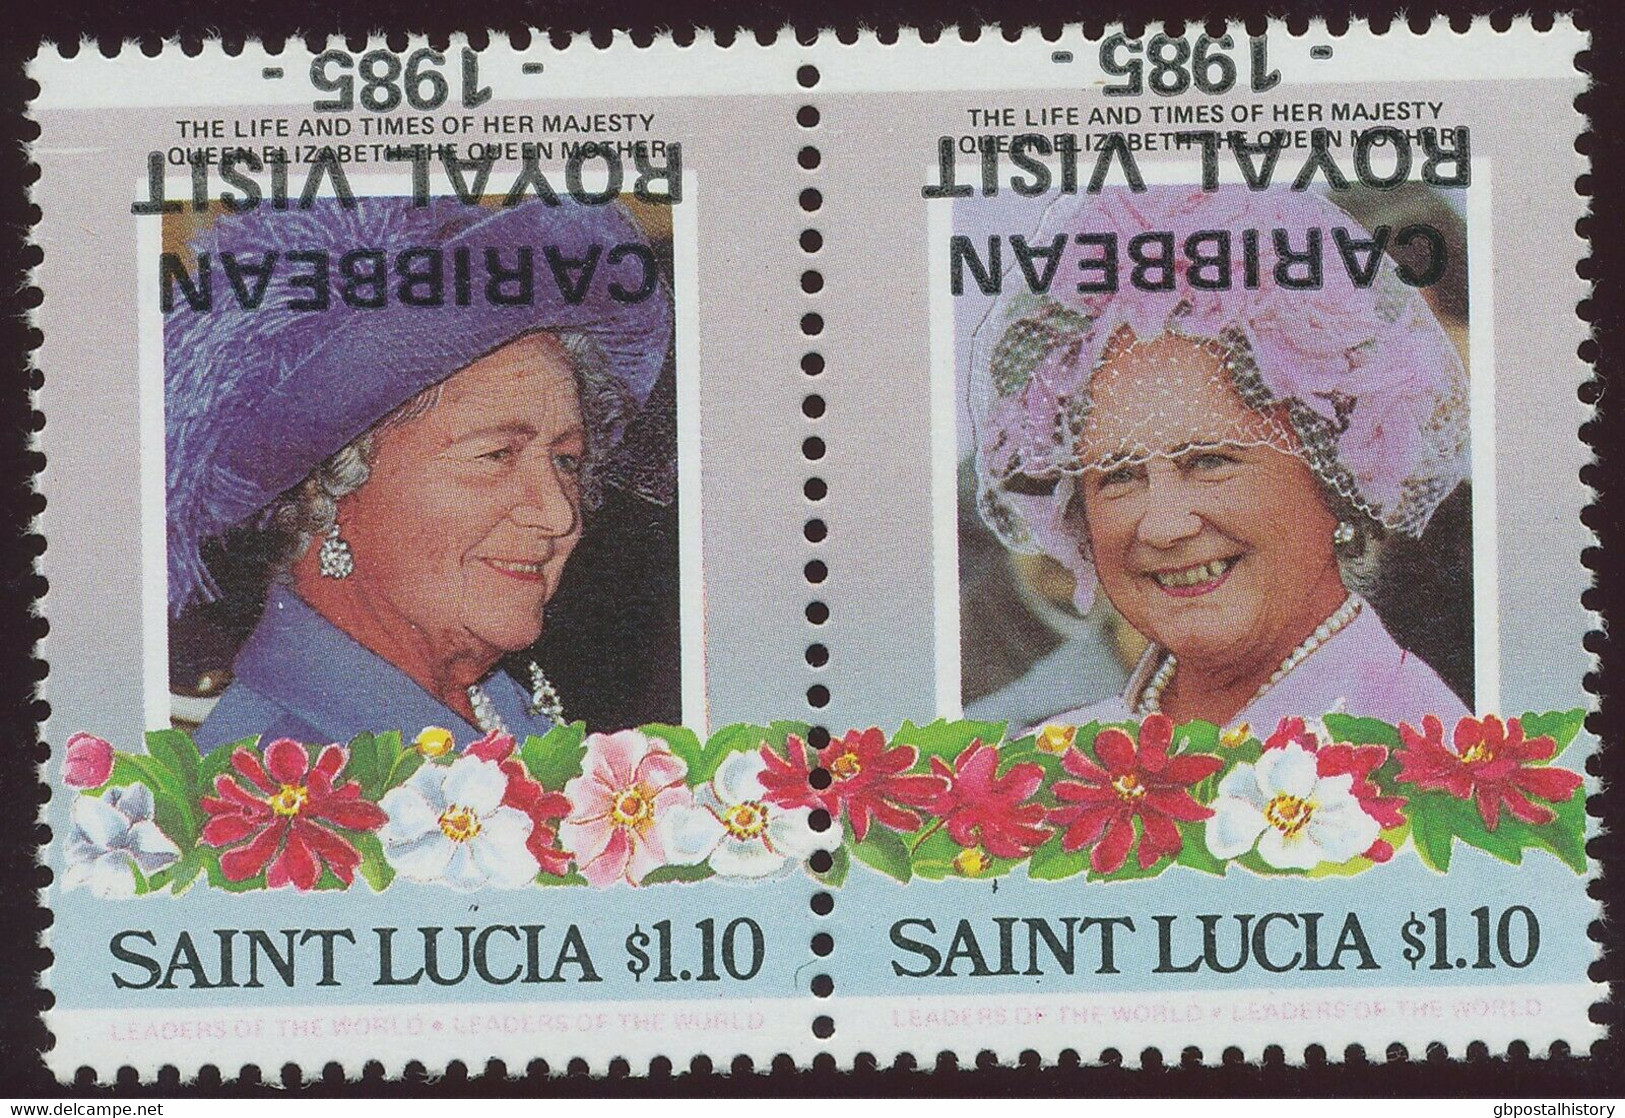 ST. LUCIA 1985 Queen Elizabeth Visit In The Caribbean U/M INVERTED OVERPRINT - St.Lucie (1979-...)